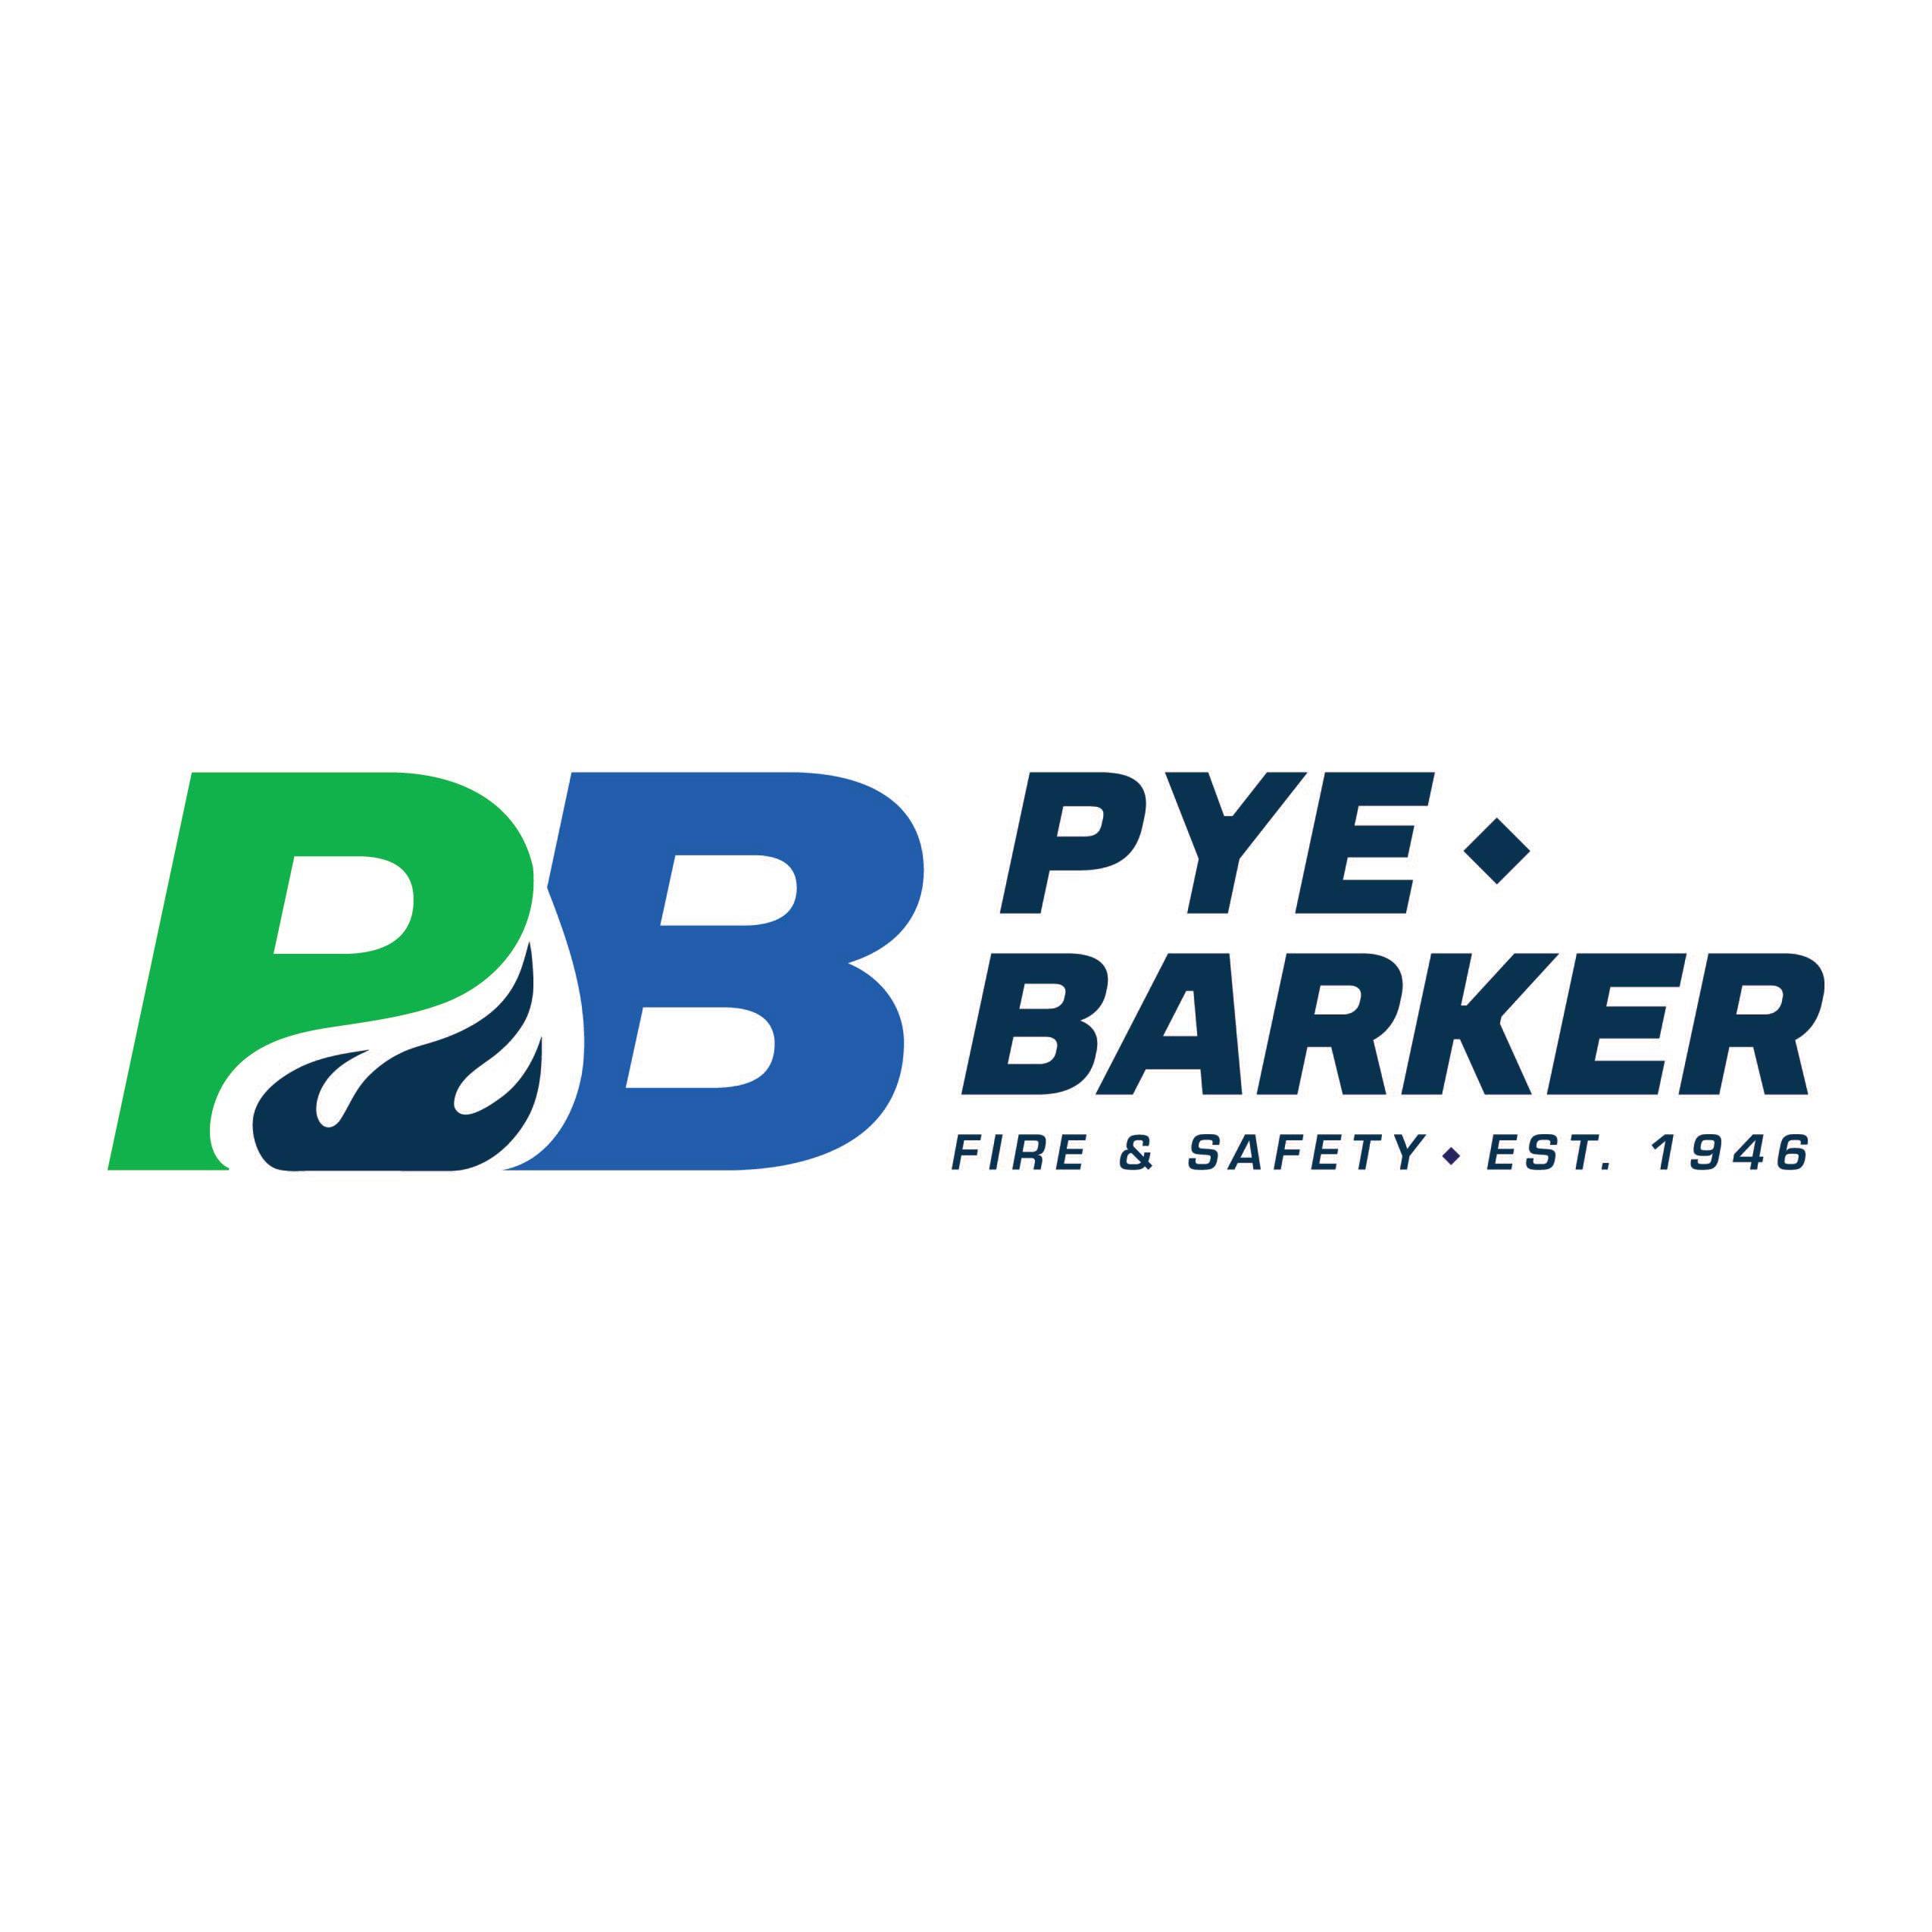 Pye-Barker Fire & Safety - Kennesaw, GA 30144 - (404)351-3473 | ShowMeLocal.com